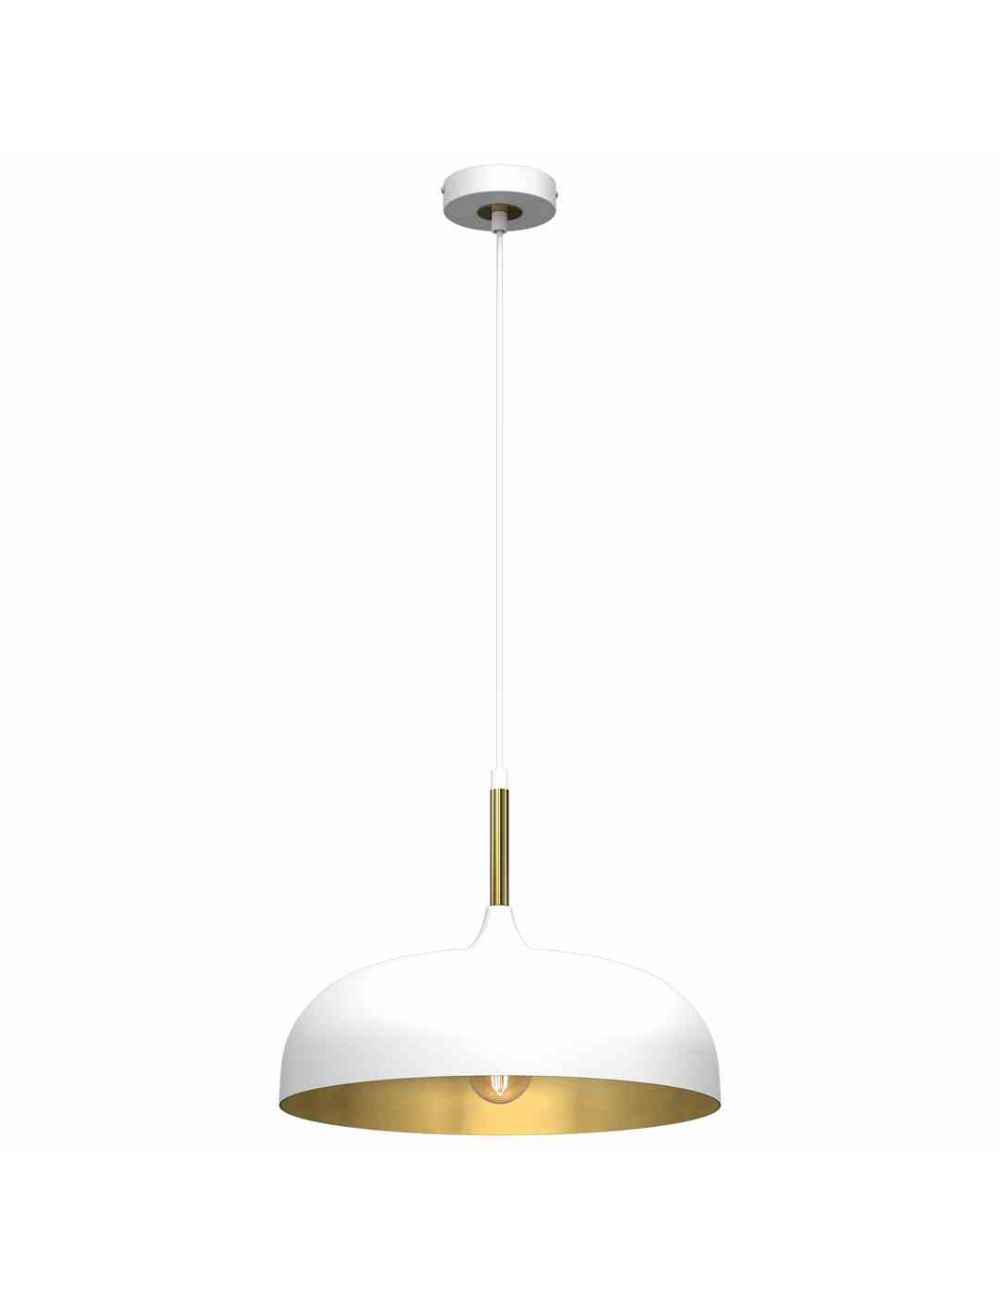 Lampa wisząca LINCOLN WHITE/GOLD 1xE27 35cm